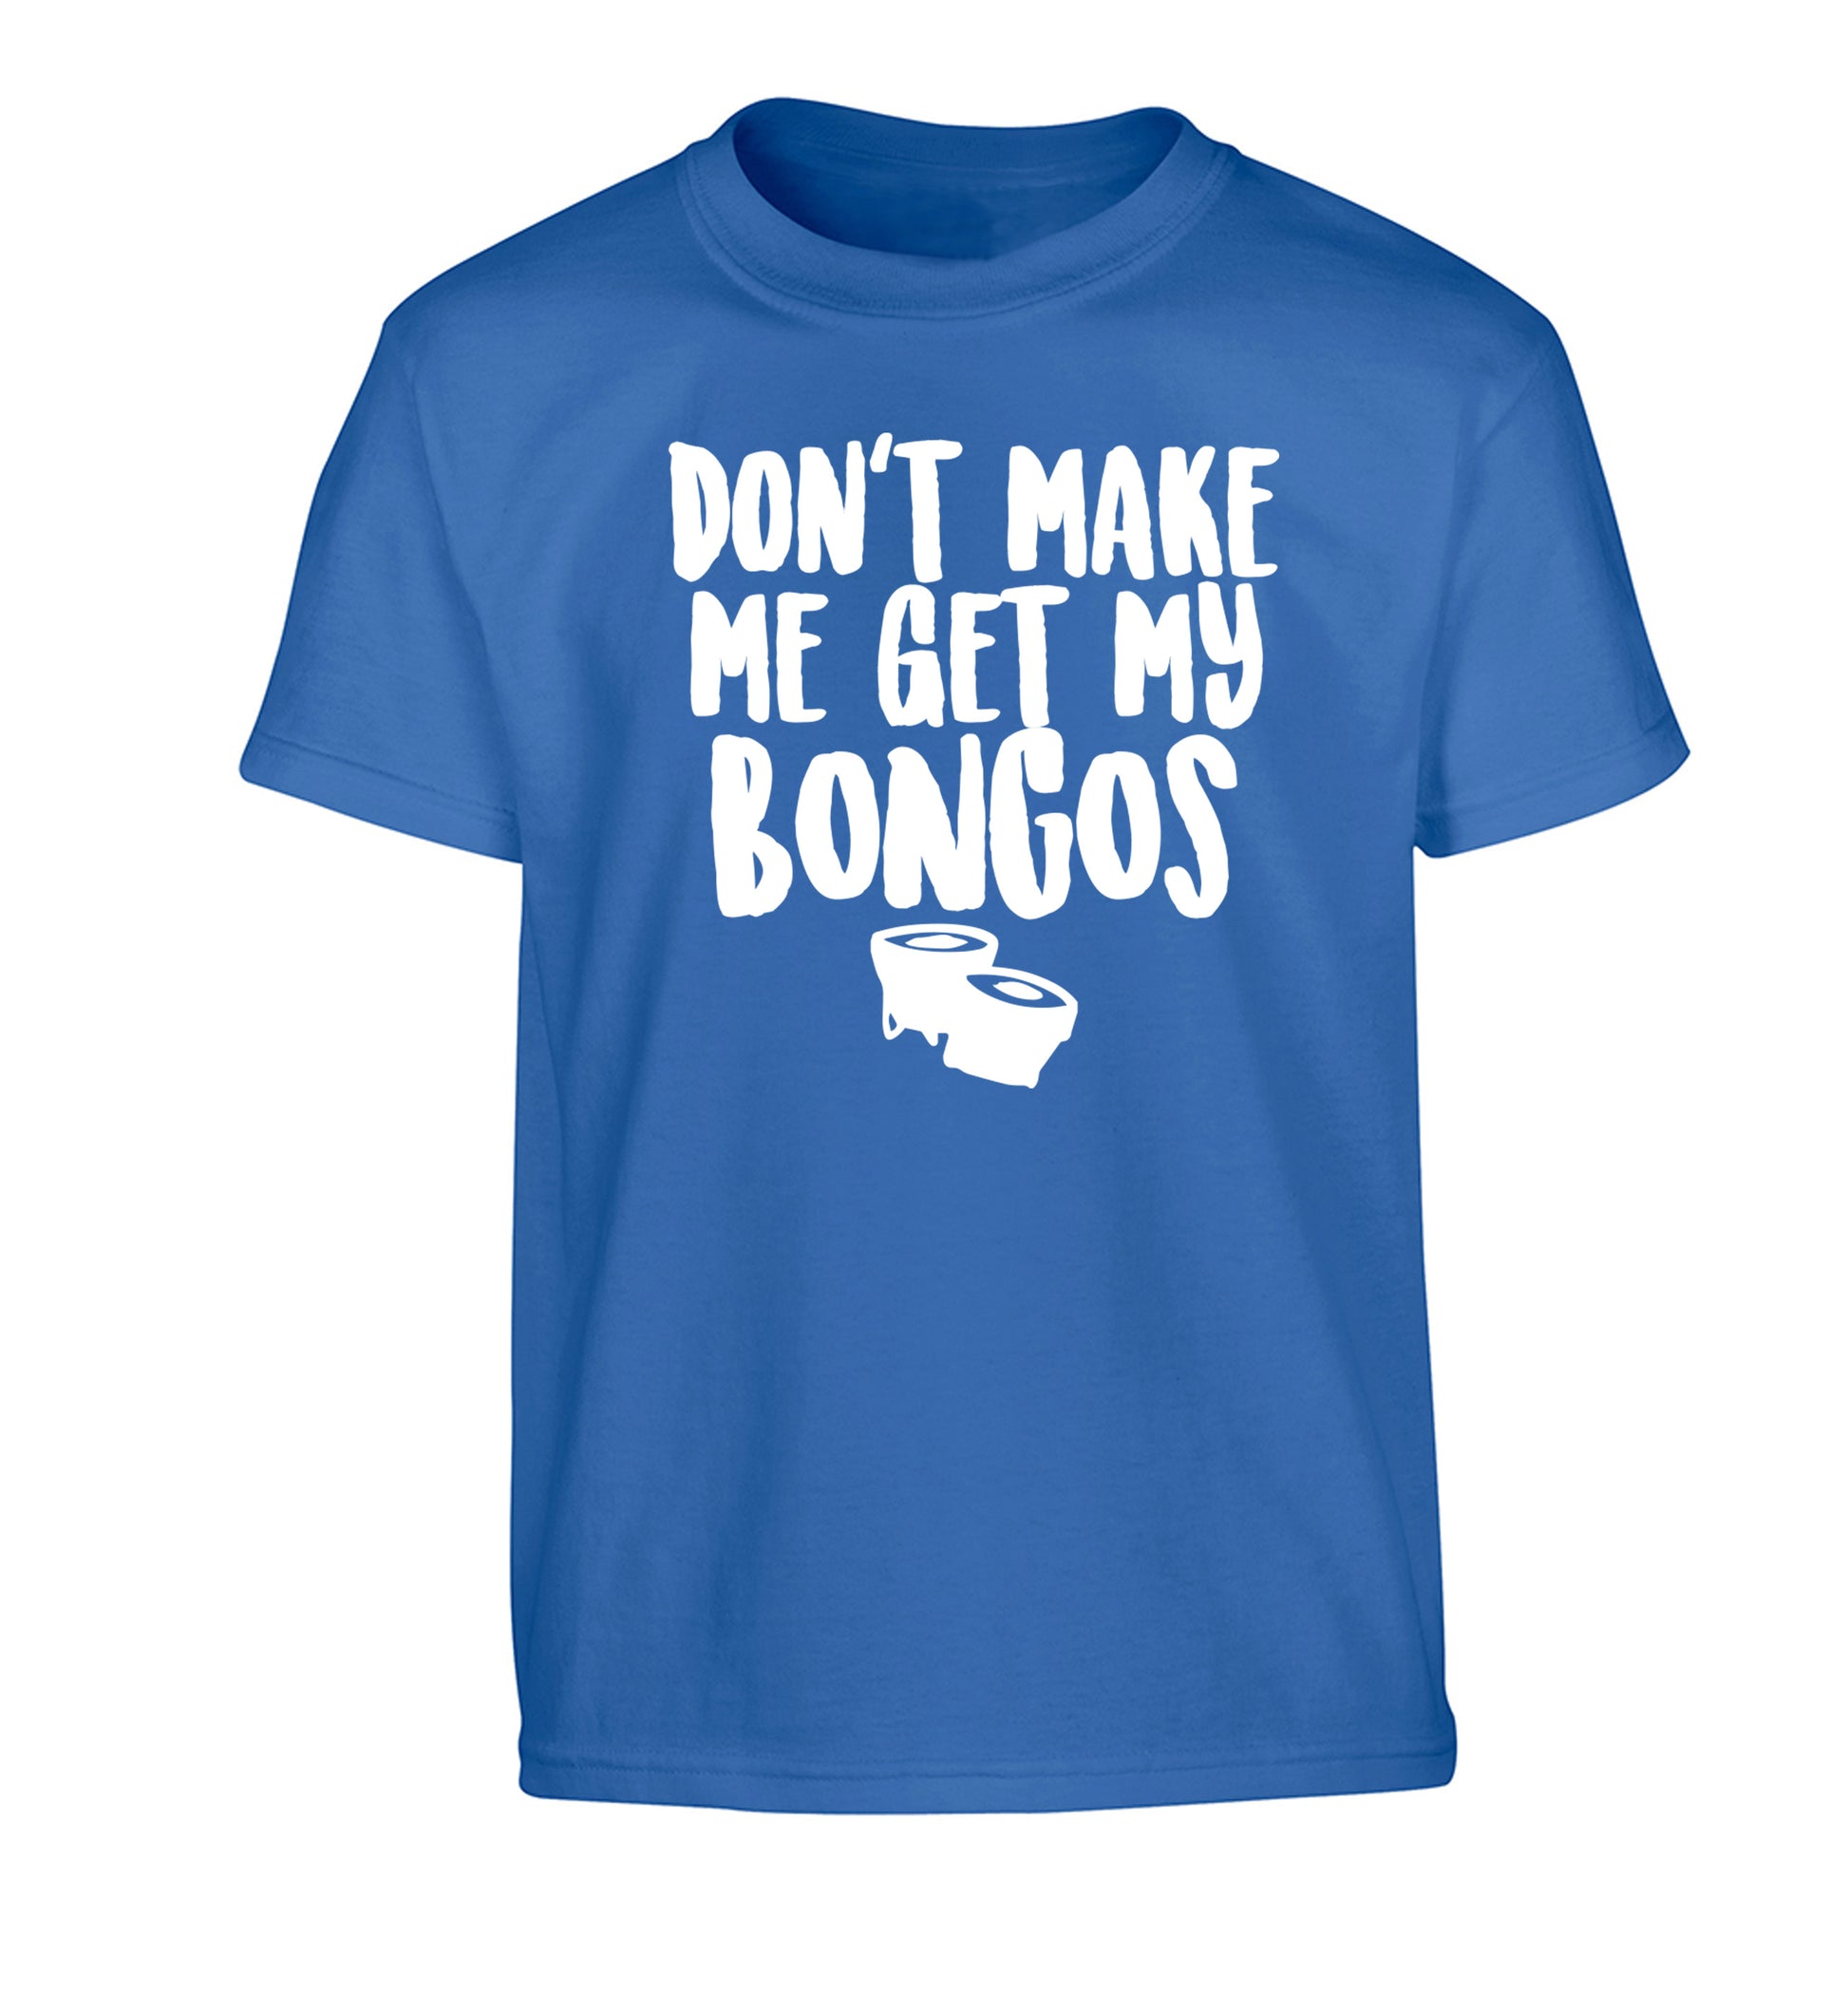 Don't make me get my bongos Children's blue Tshirt 12-14 Years